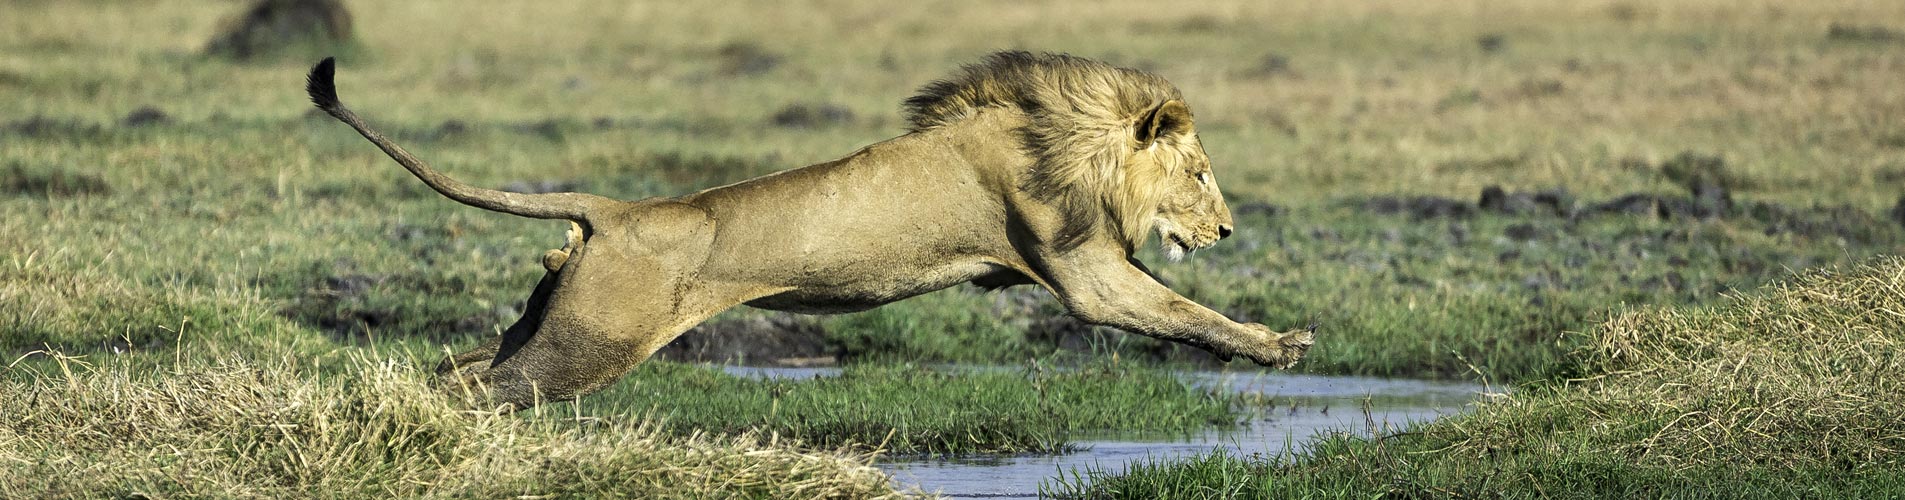 African Safari Travel Lion Running